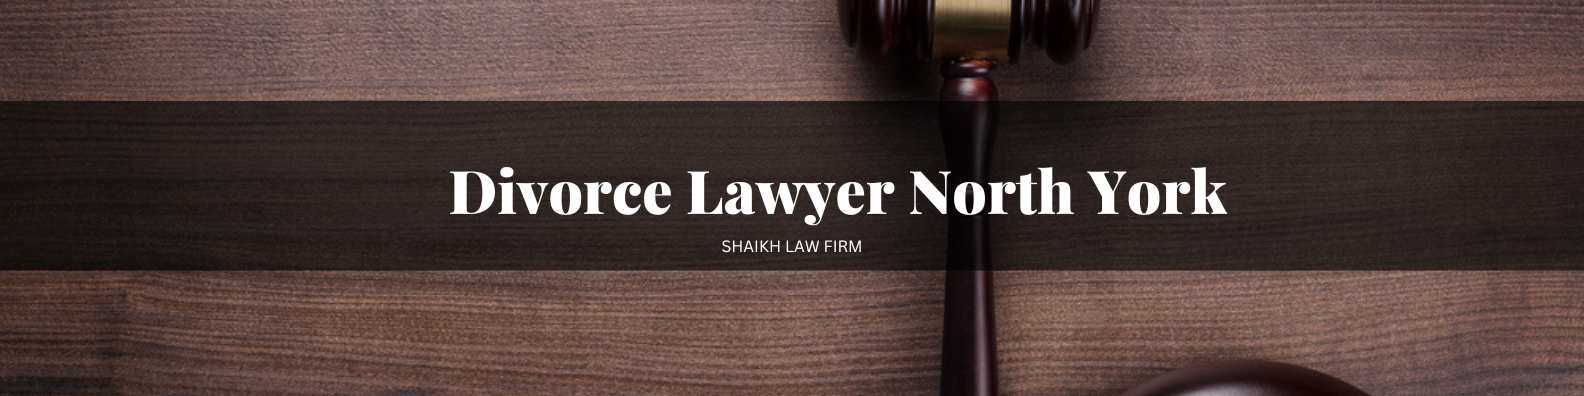 Divorce Lawyer North York